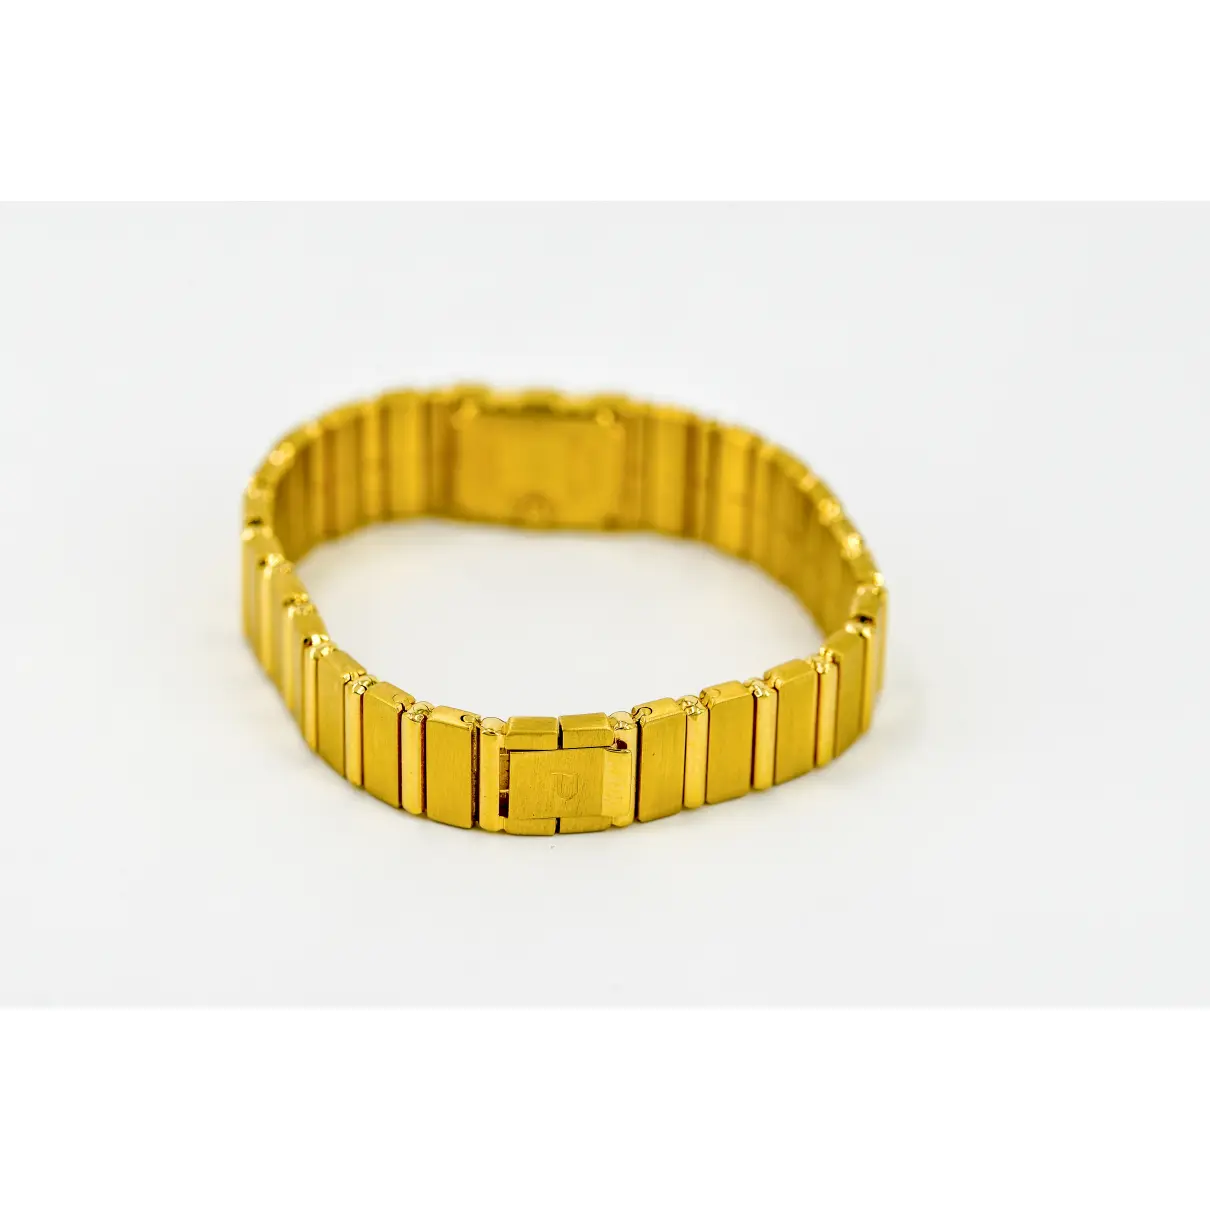 Buy Piaget Yellow gold watch online